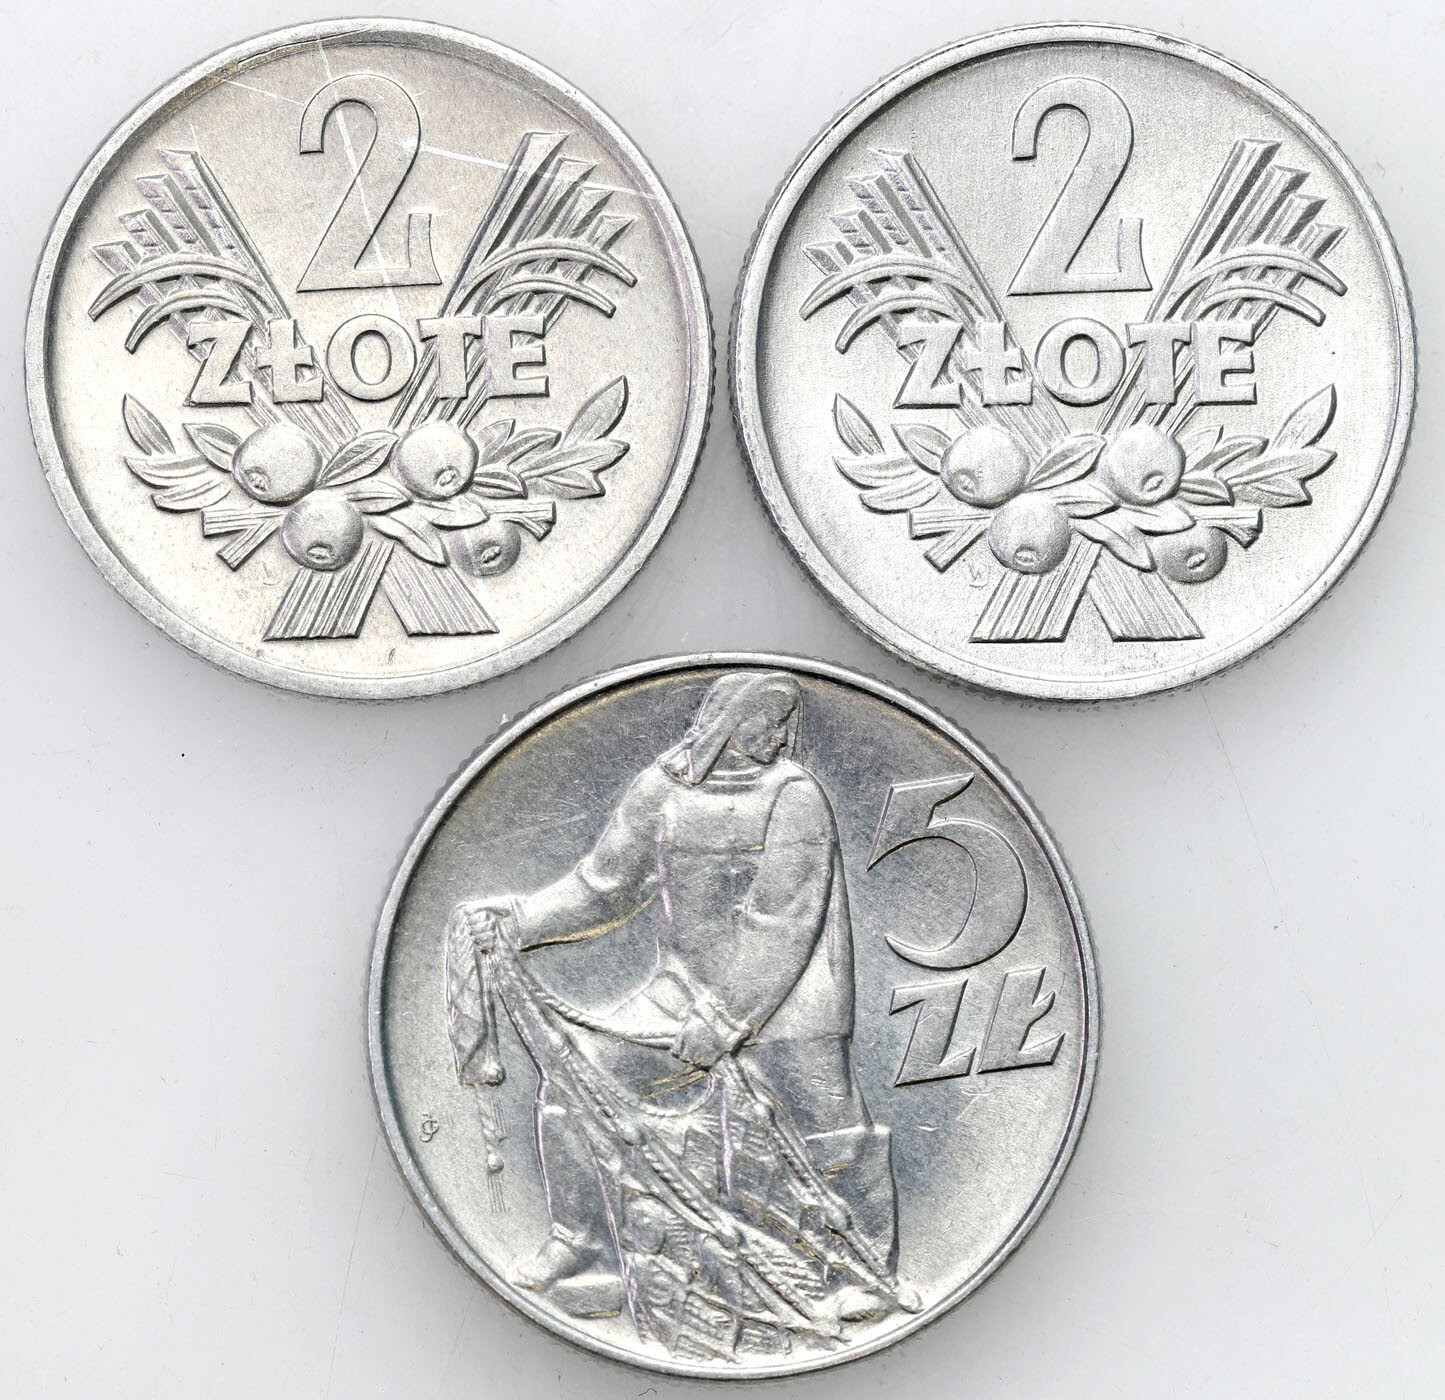 PRL. 5 złotych 1973 Rybak, 2 złote 1960 i 1973 Jagody